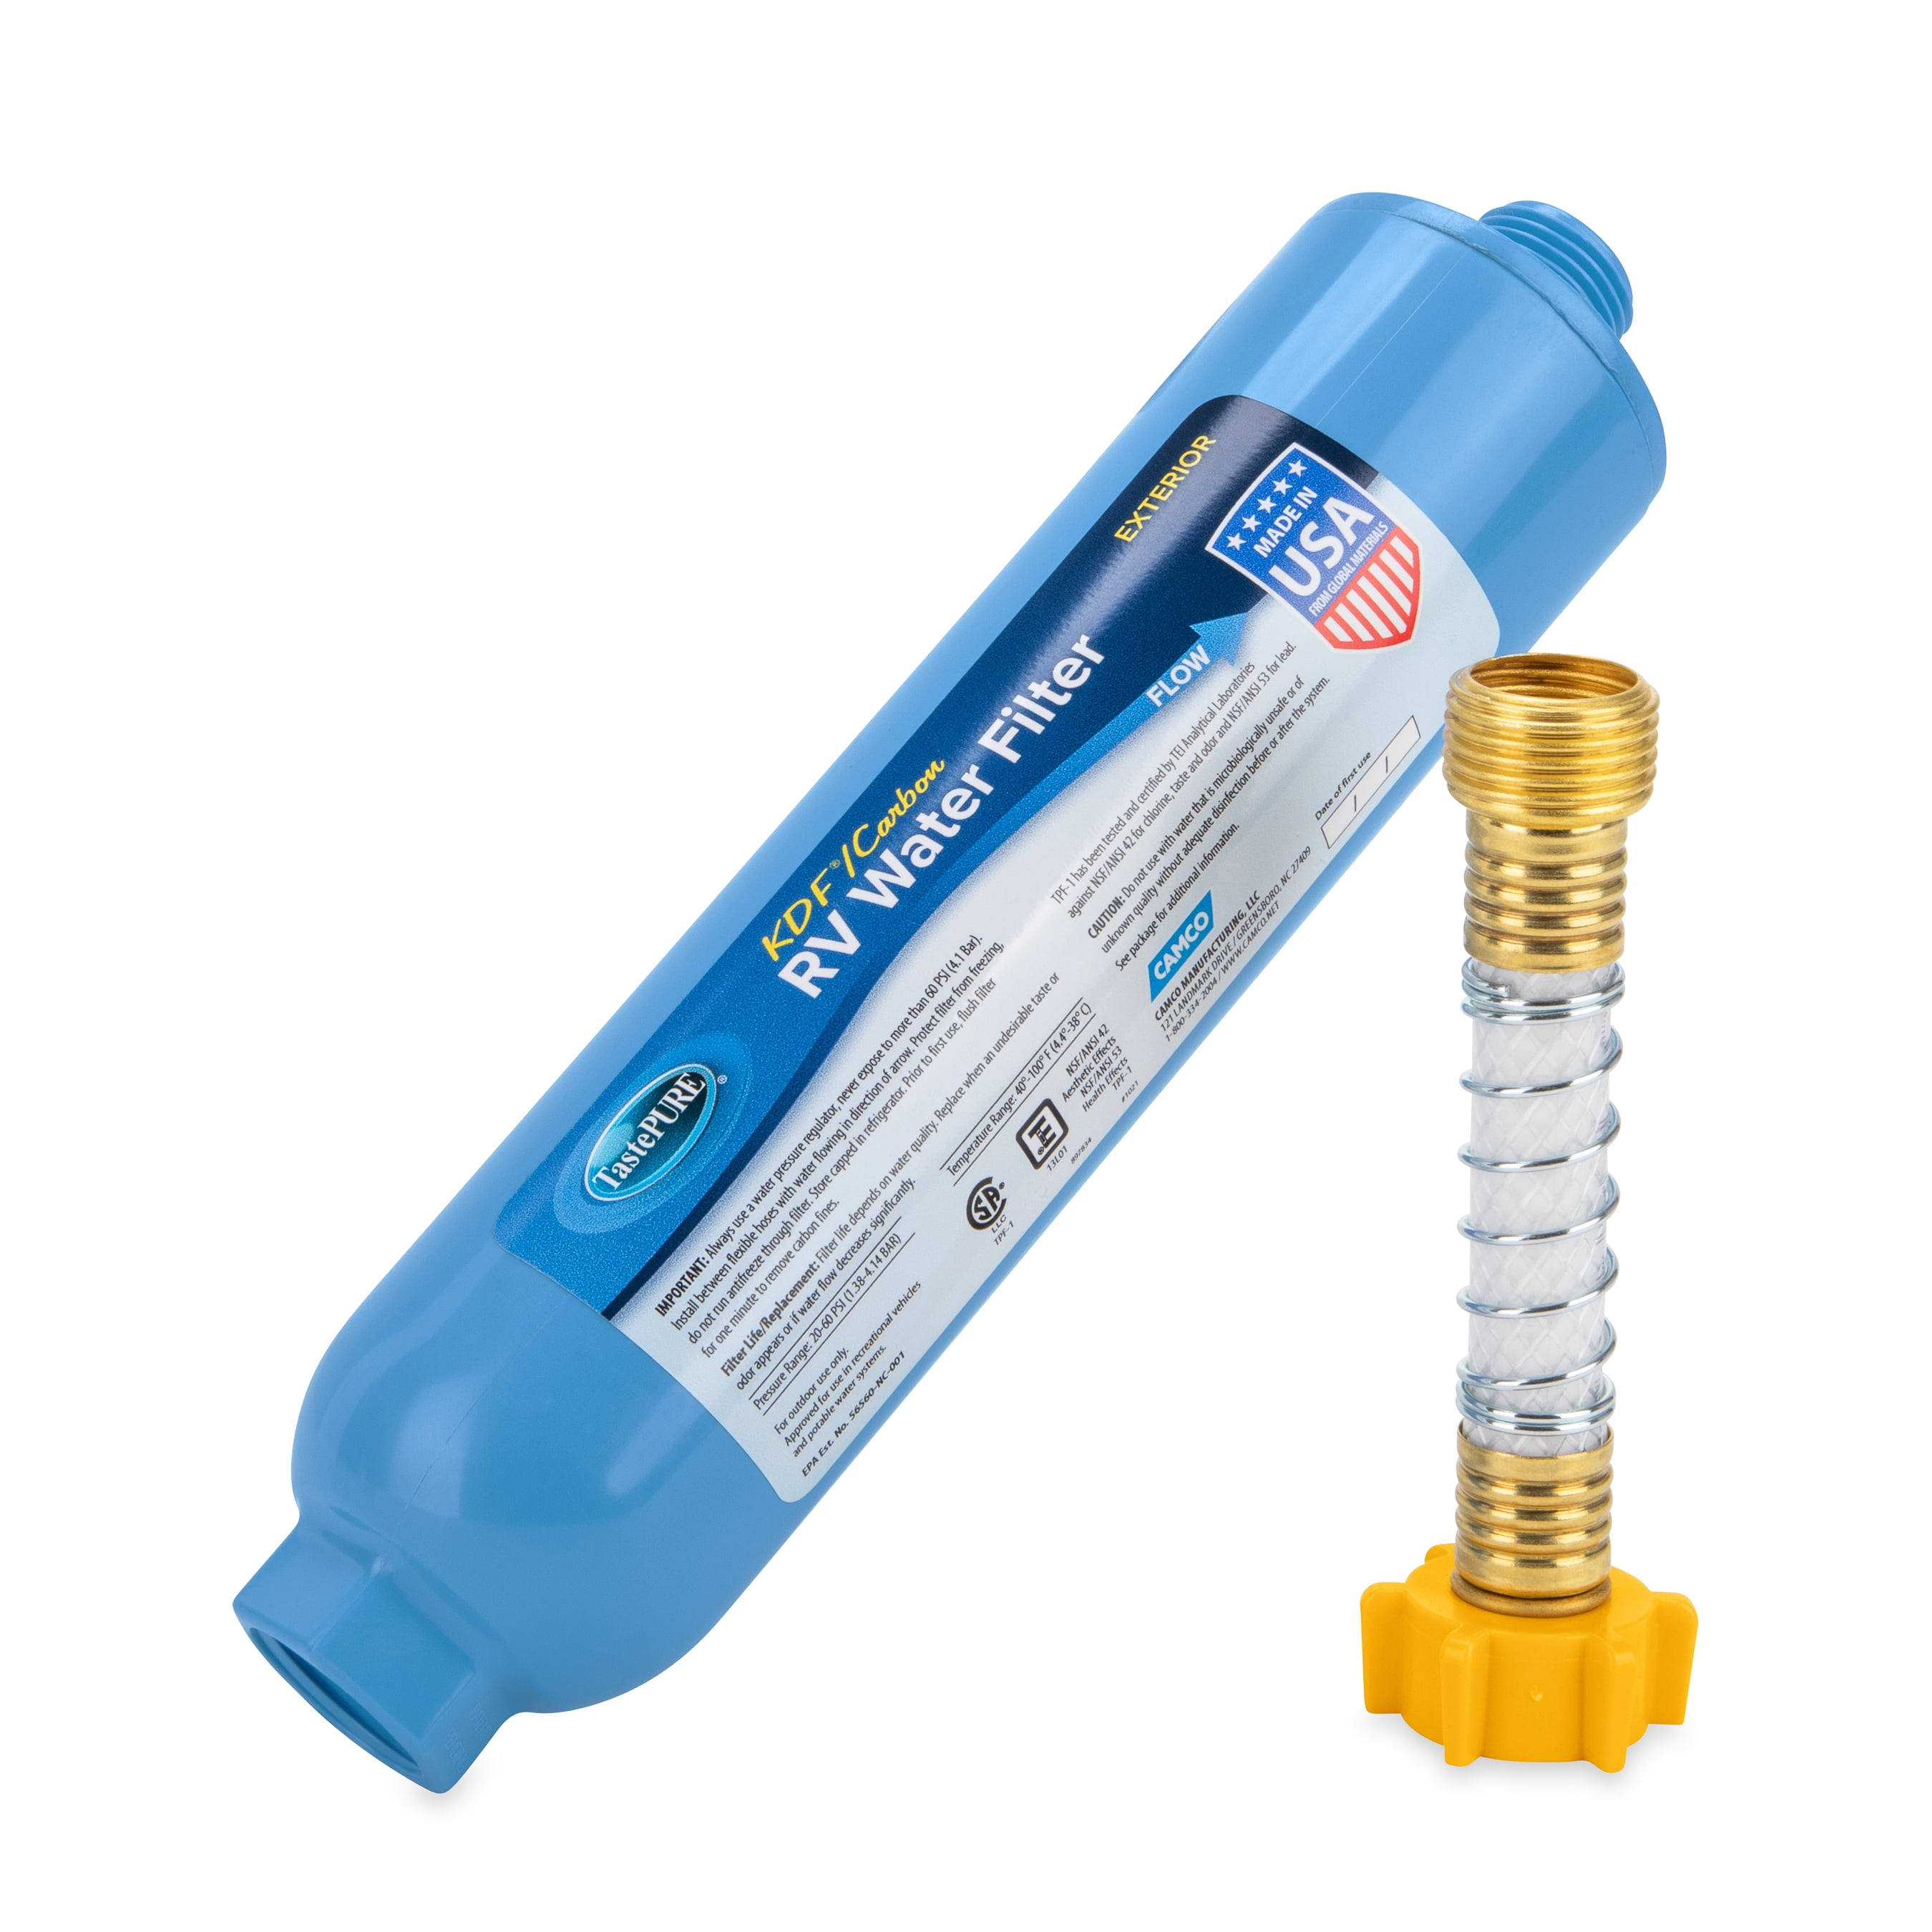 TastePURE XL RV / Marine Water Filter, Camco